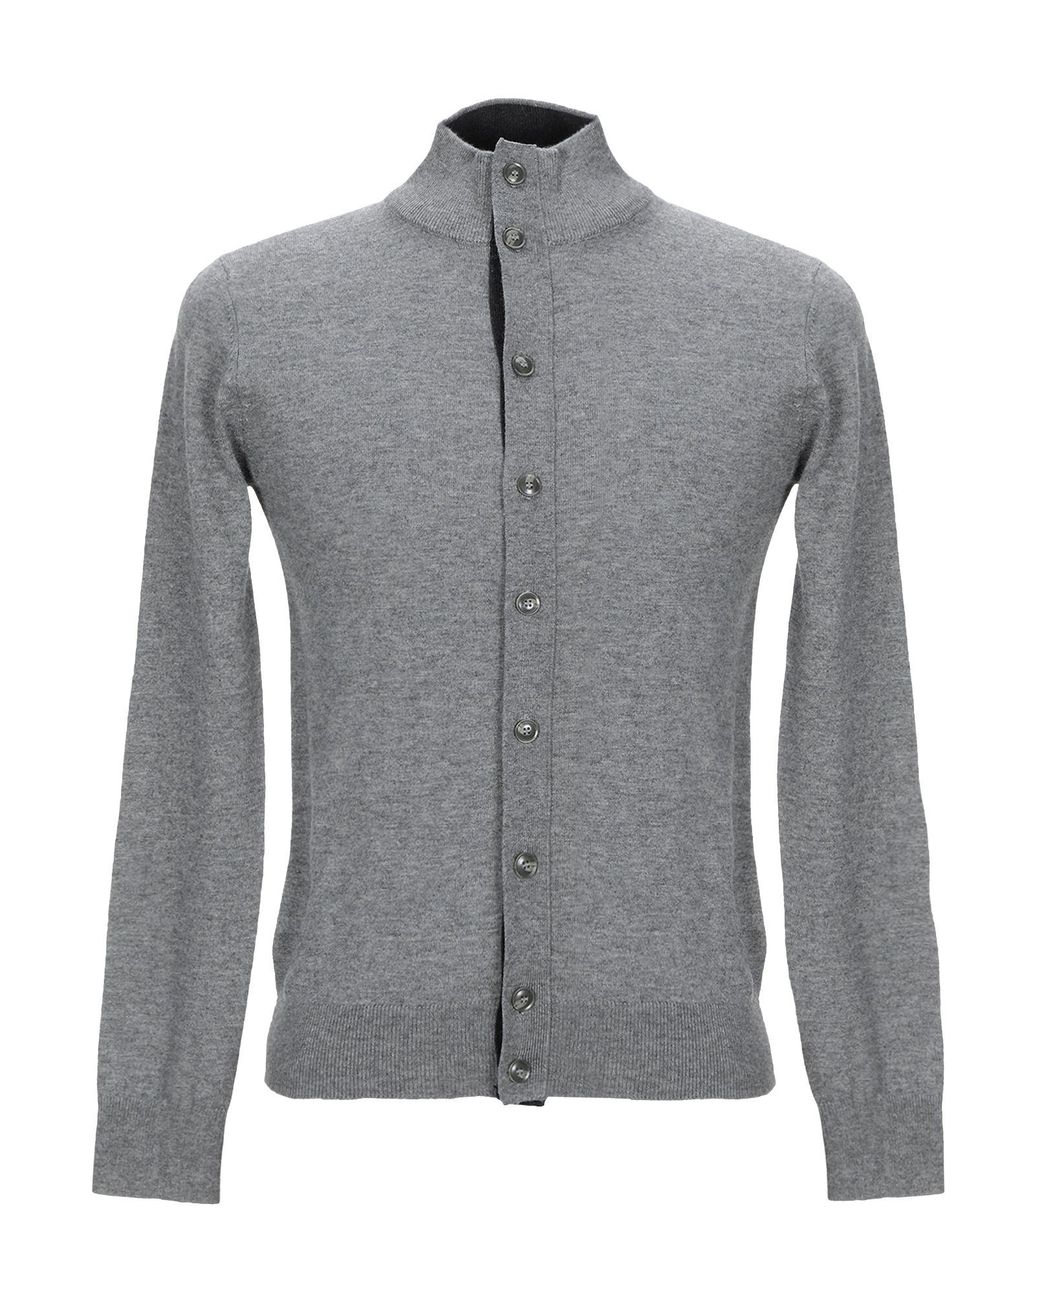 Balmain Wool Cardigan in Grey (Gray) for Men - Lyst